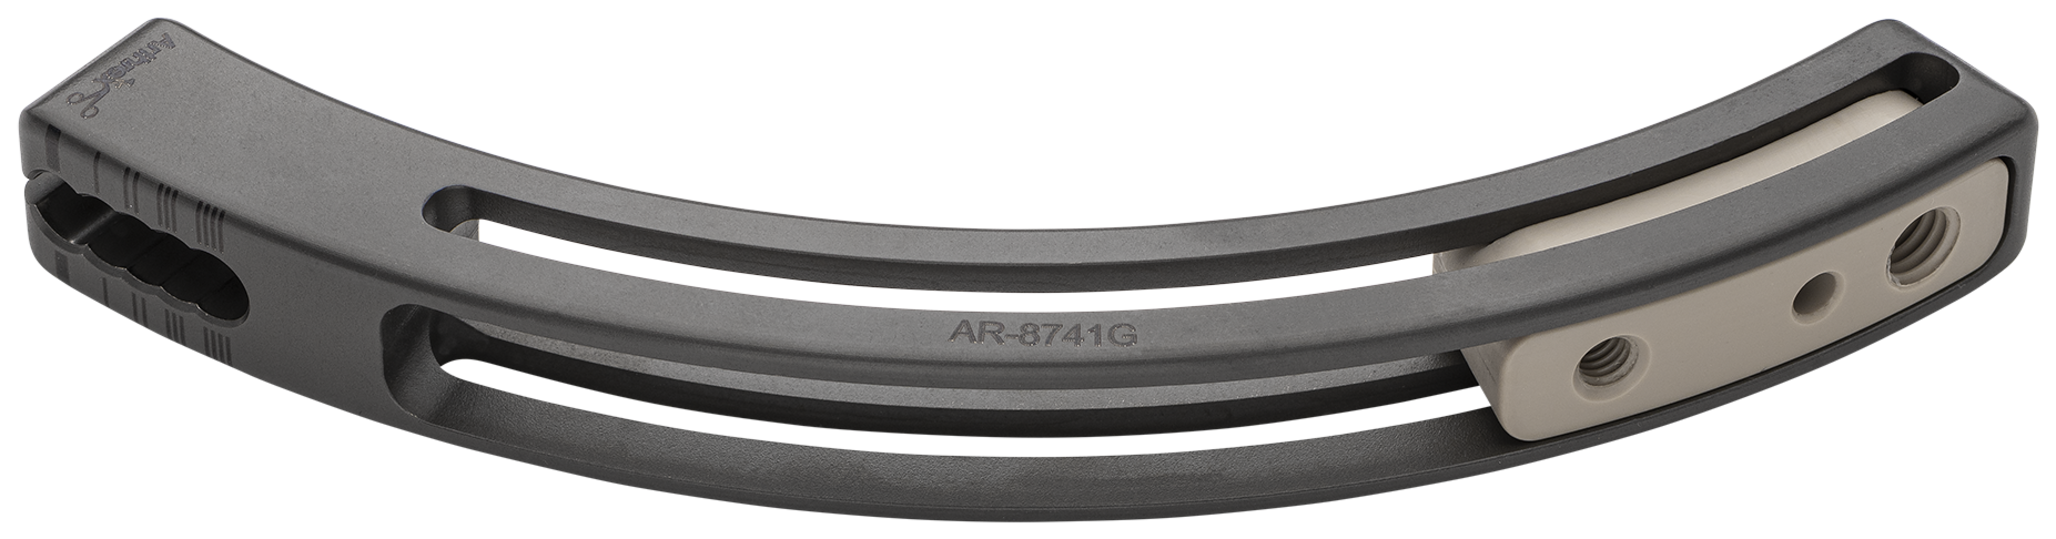 Arthrex - Capital Fragment Shifter Large - AR-8741LS-02